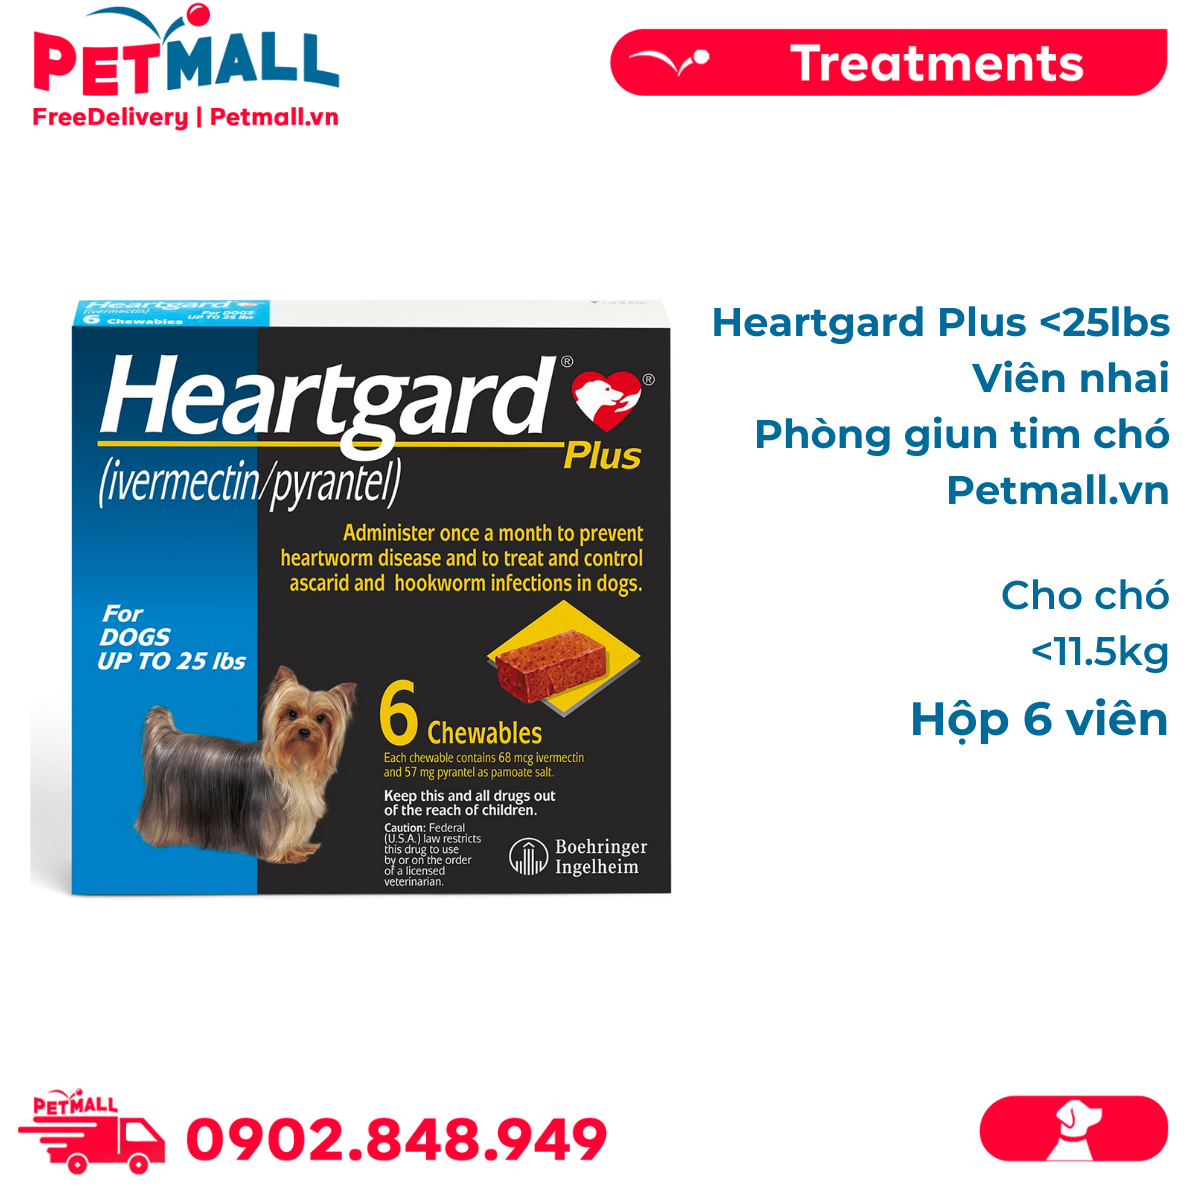 nexgard-heartgard-rebates-are-now-instant-animal-and-bird-hospital